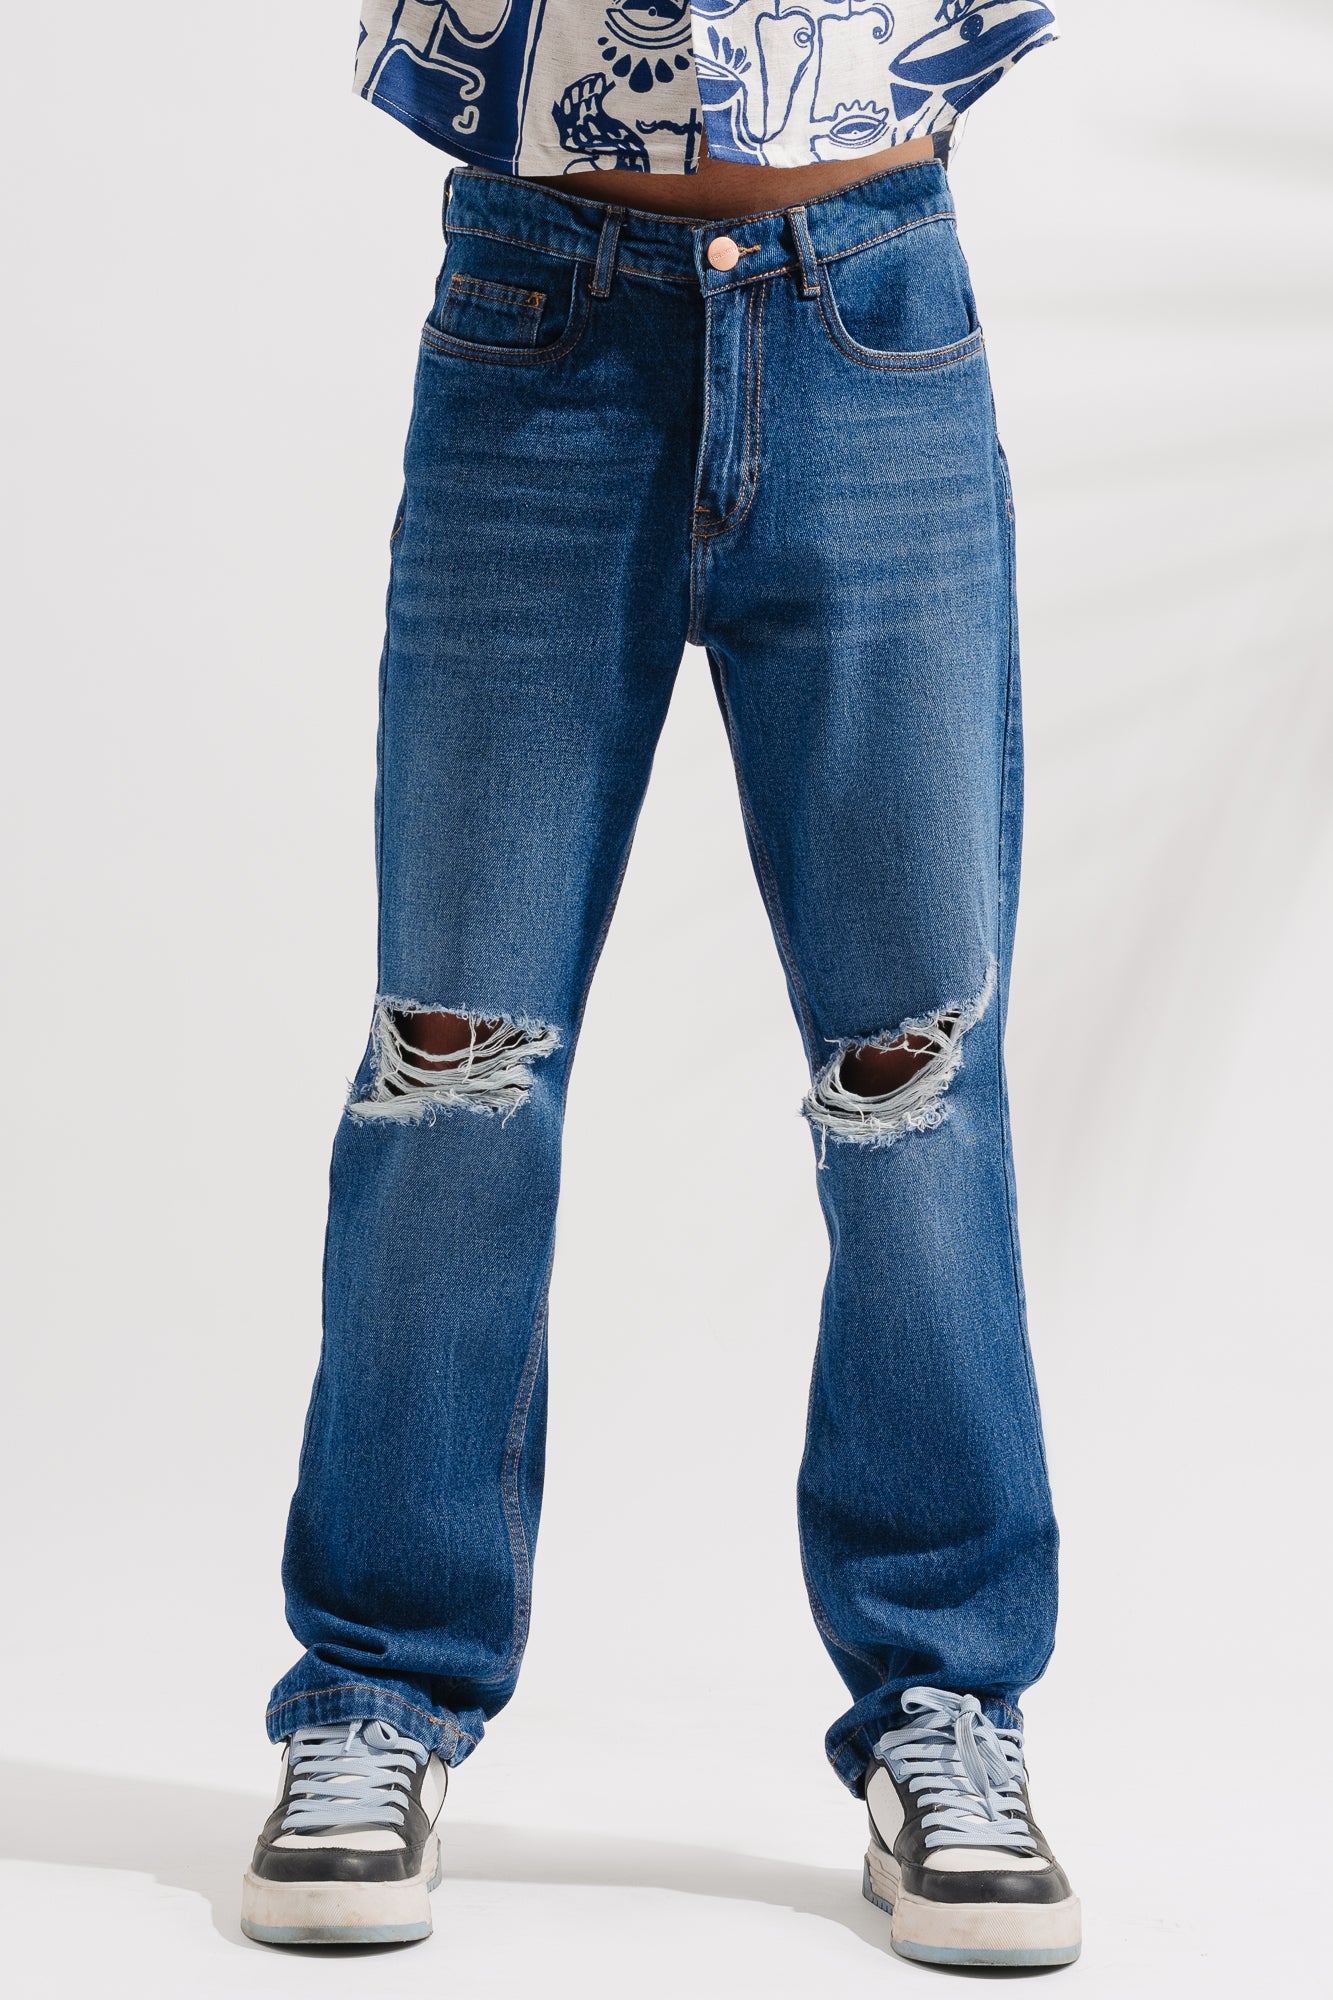 Buy NAWHT 16.5oz Natural Indigo Acid Wash High Rise Tapered Jeans